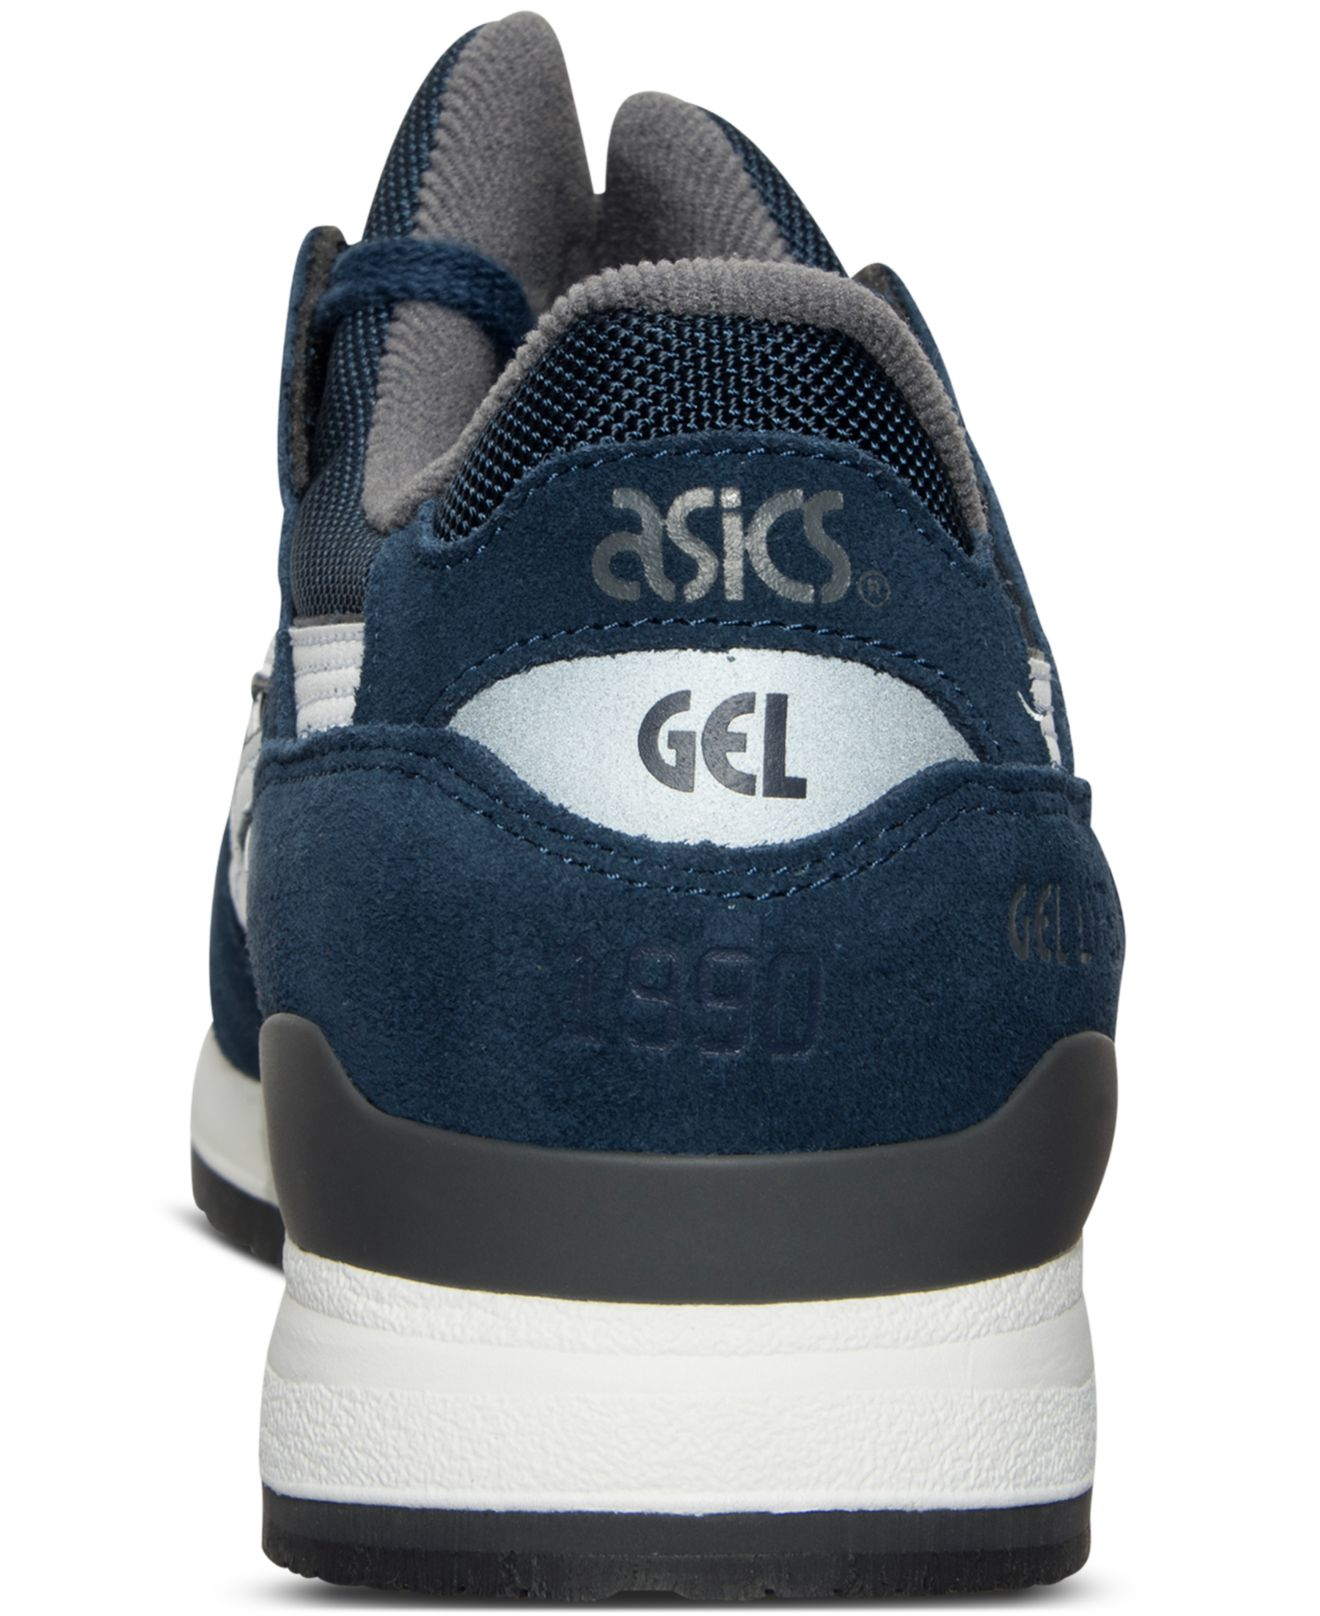 Lyst - Asics Men's Gel-lyte Iii Casual Sneakers From ...